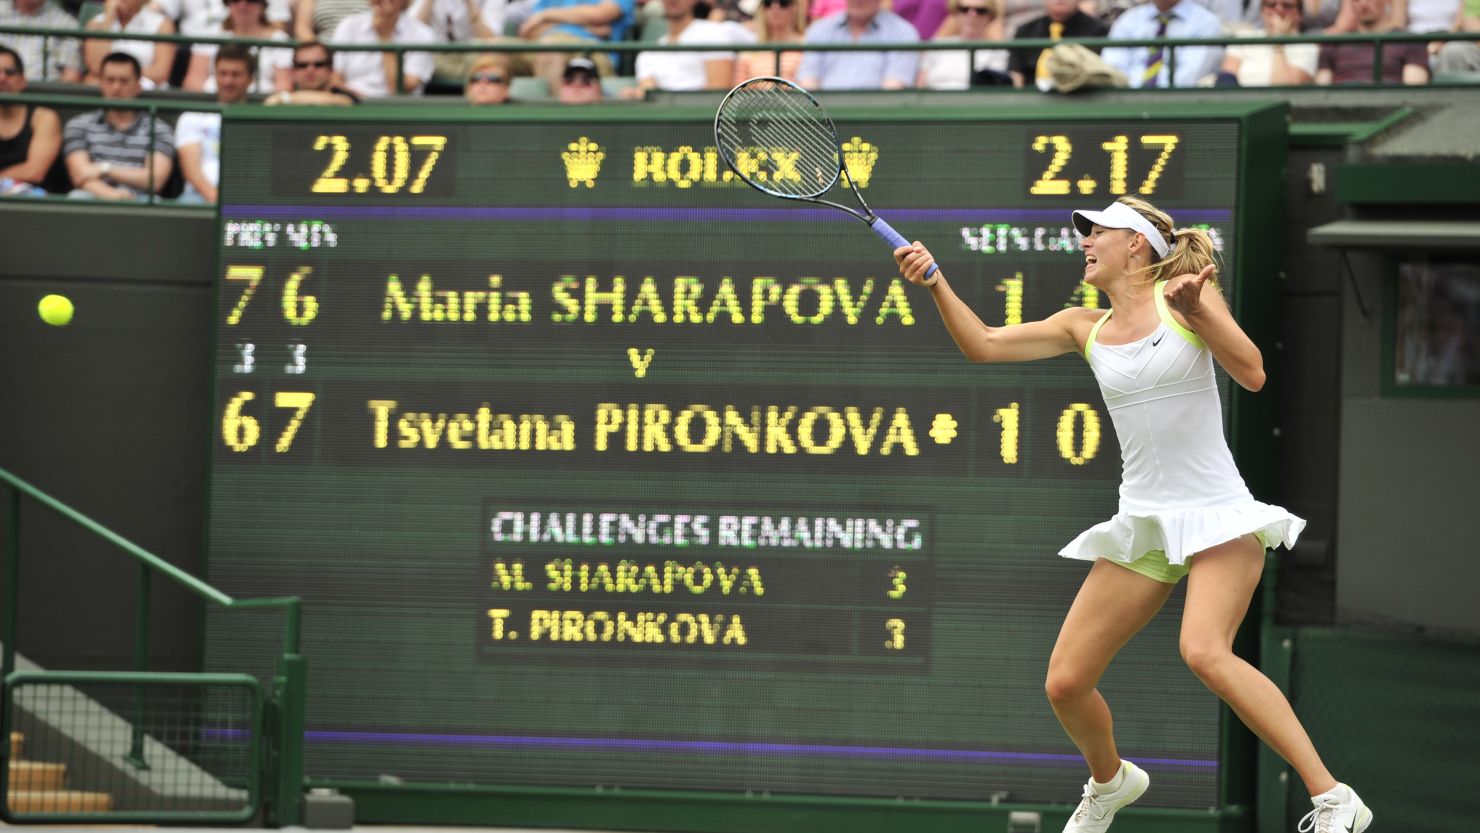 Russia's Maria Sharapova plays a forehand shot during her second round women's singles victory over Bulgaria's Tsvetana Pironkova 